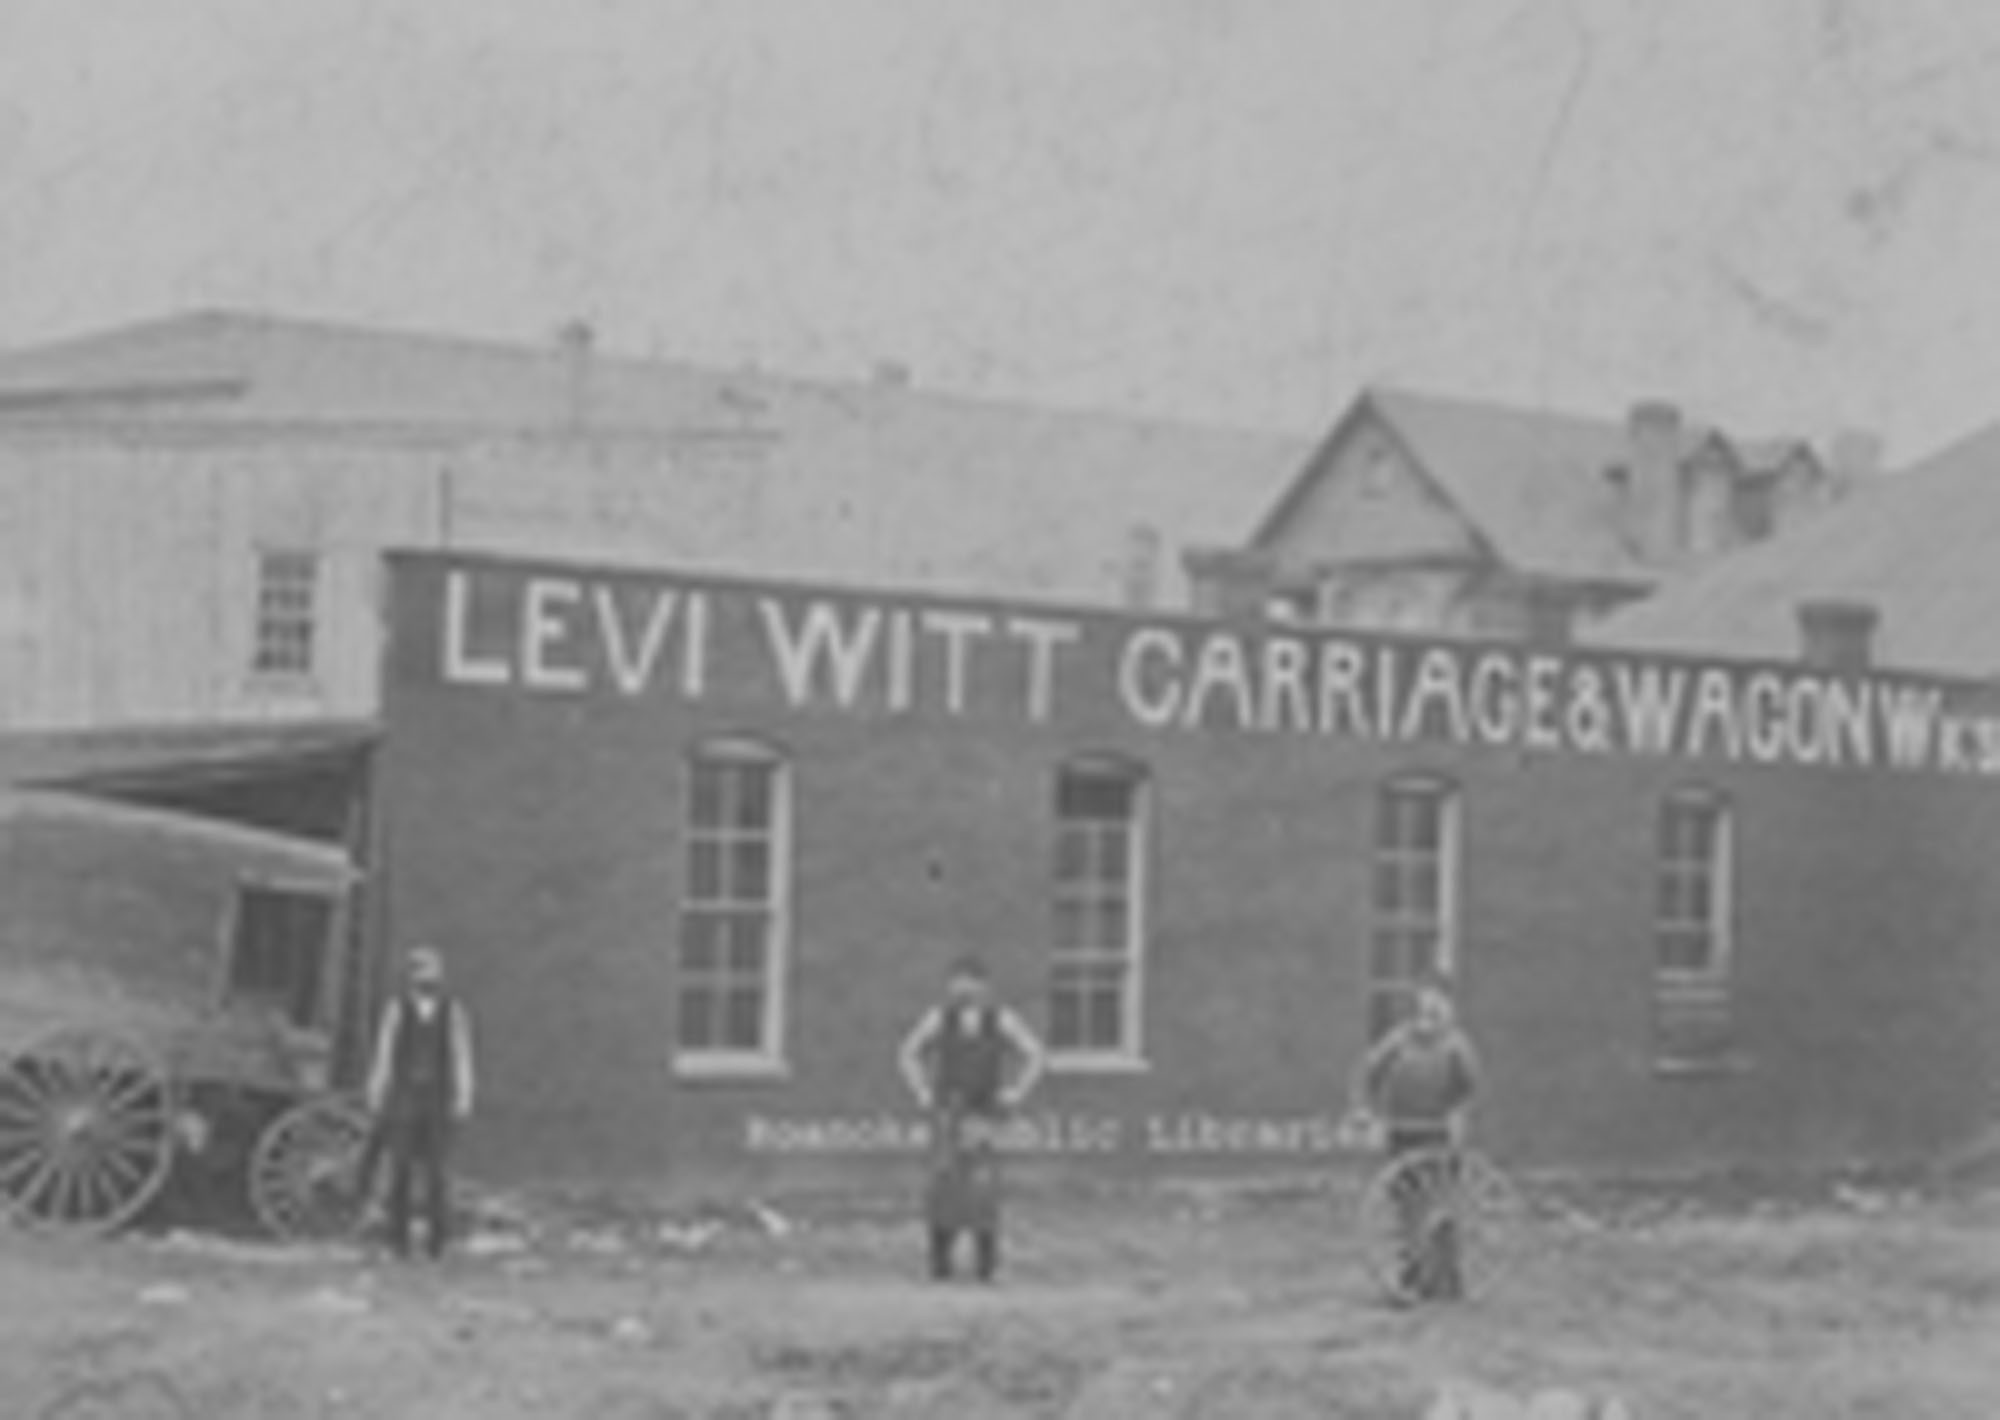 Davis 45.52 Levi Witt Carriage & Wagon.jpg